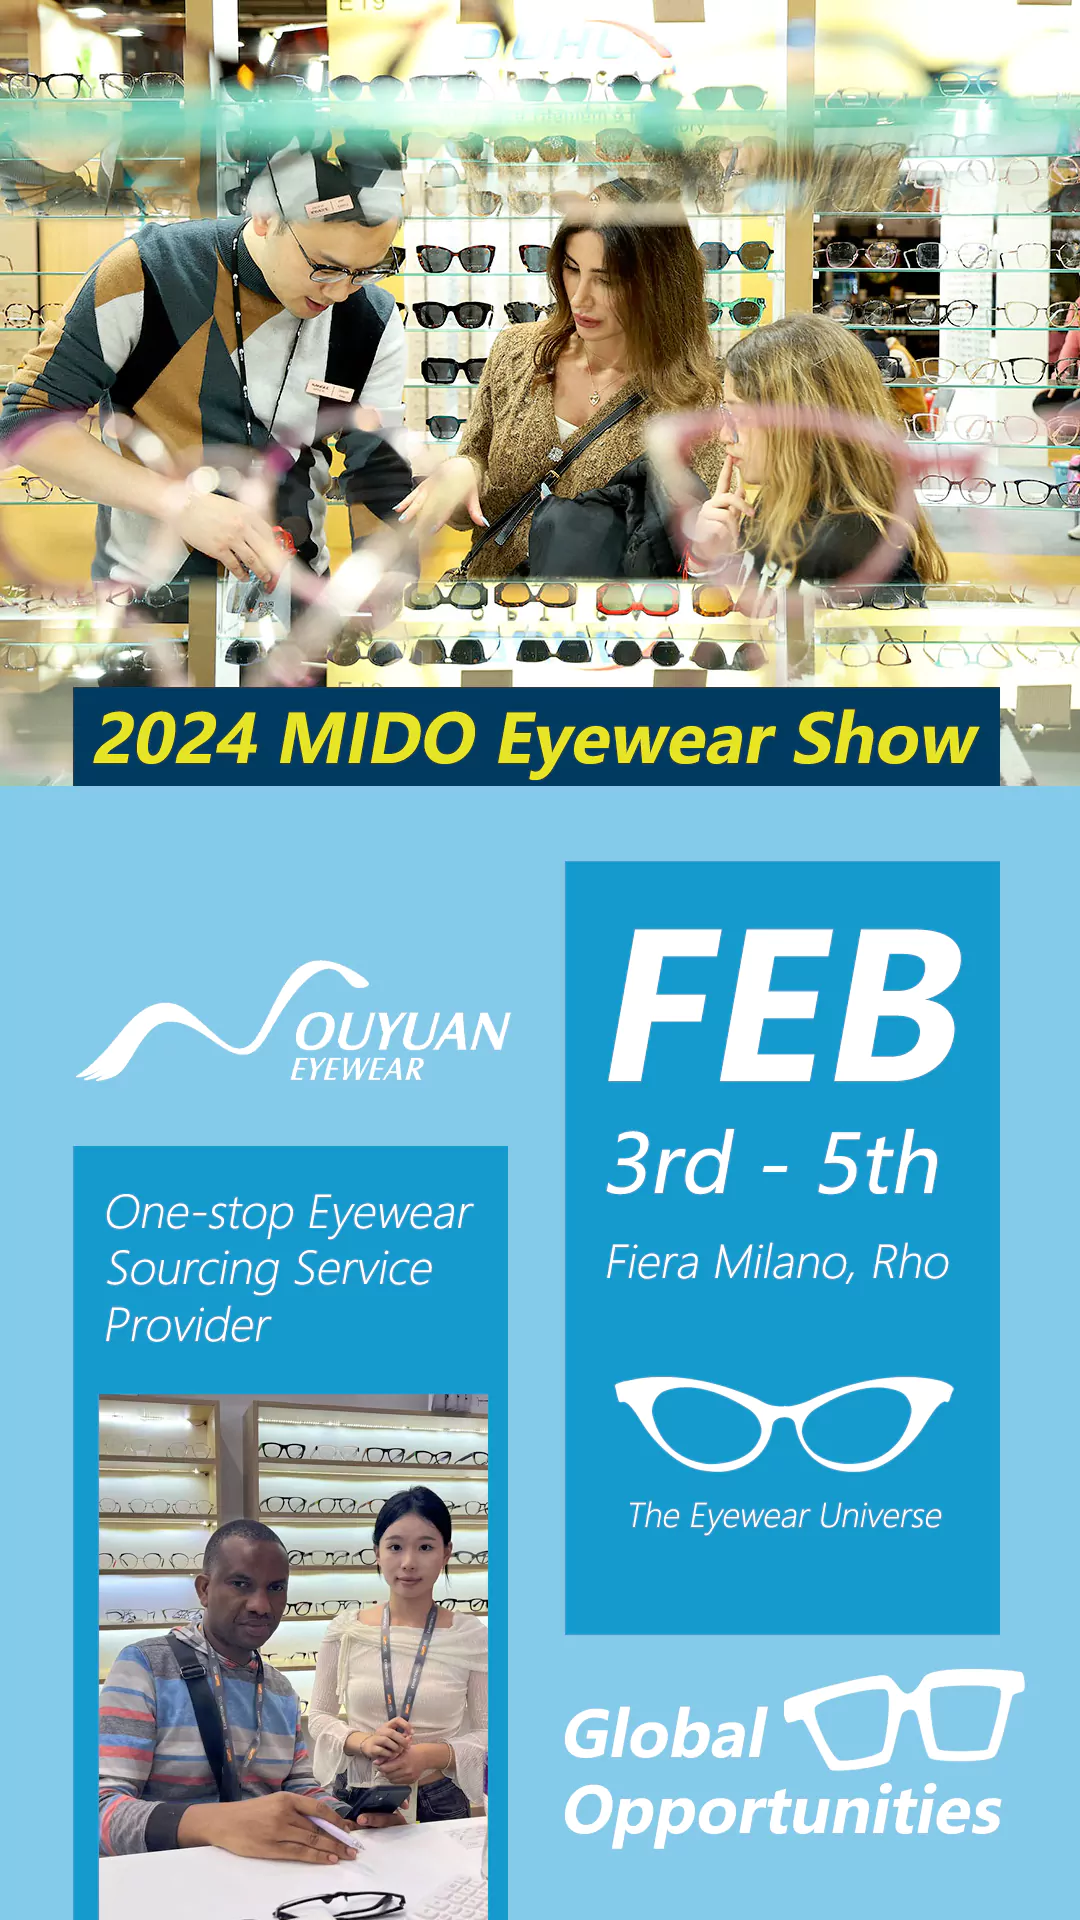 2024 MIDO Eyewear Show, Venue, Date